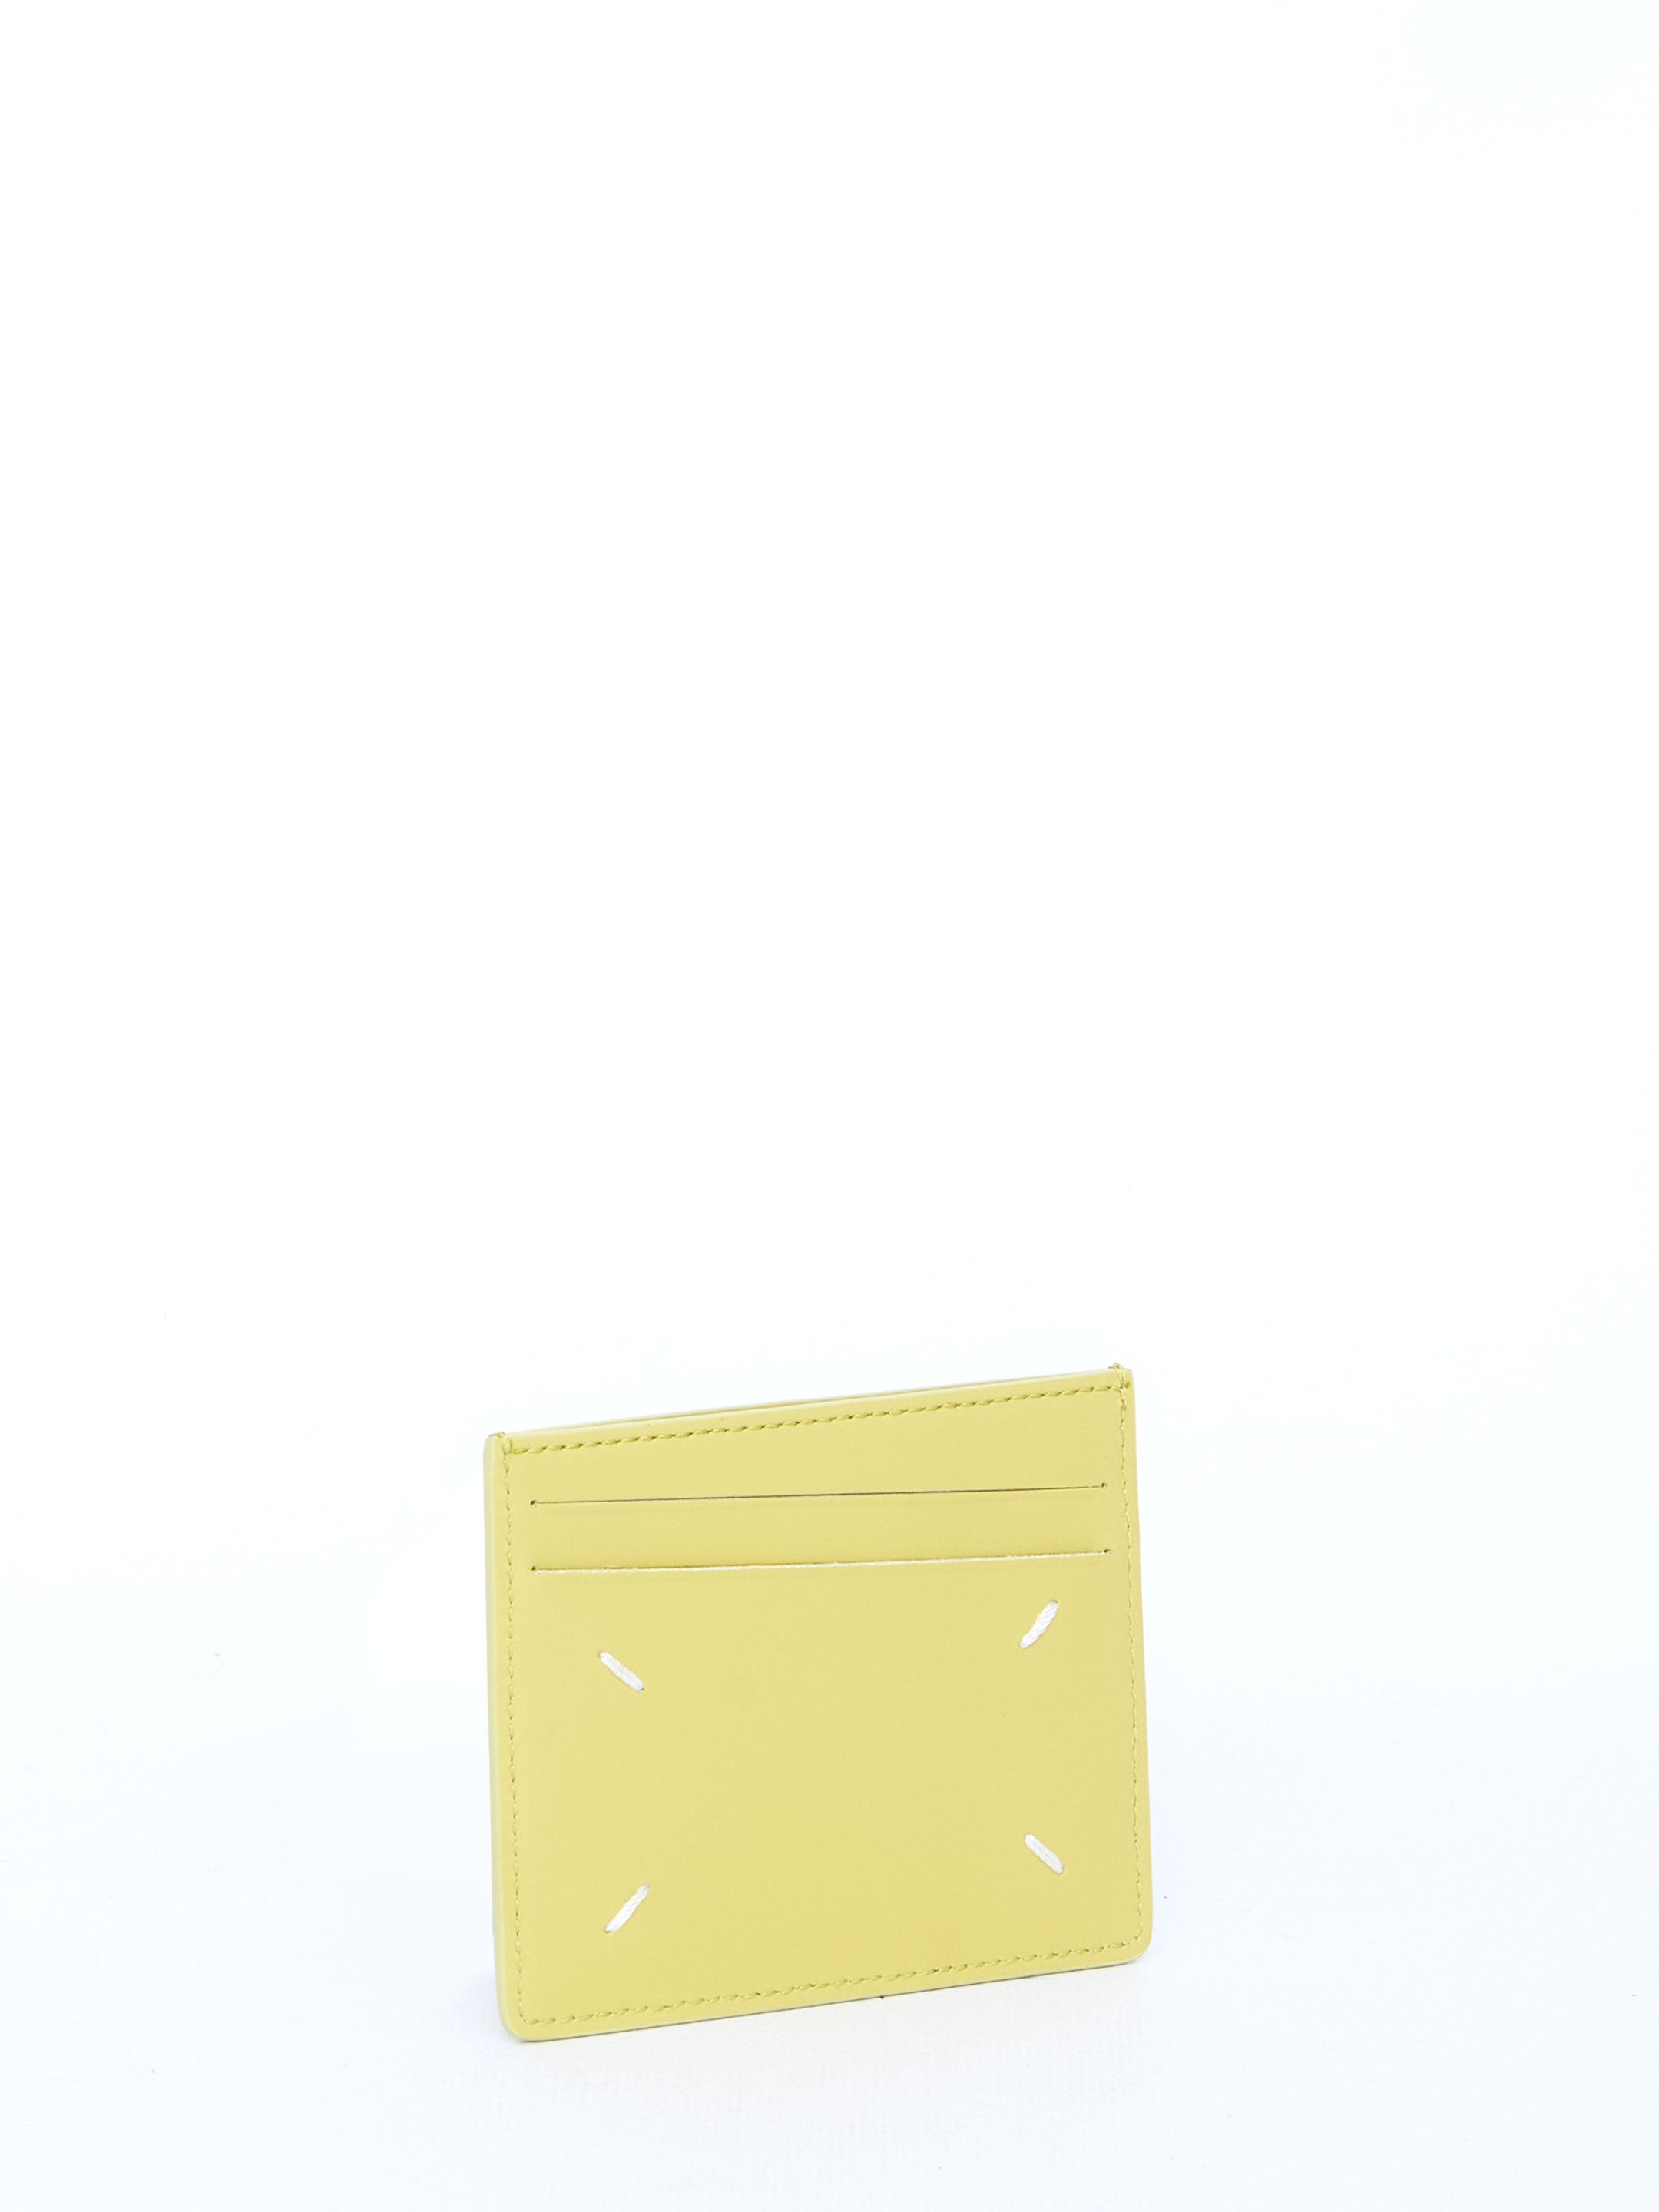 MAISON-MARGIELA-OUTLET-SALE-Lime-leather-cardholder-Taschen-QT-GREEN-ARCHIVE-COLLECTION-2.jpg